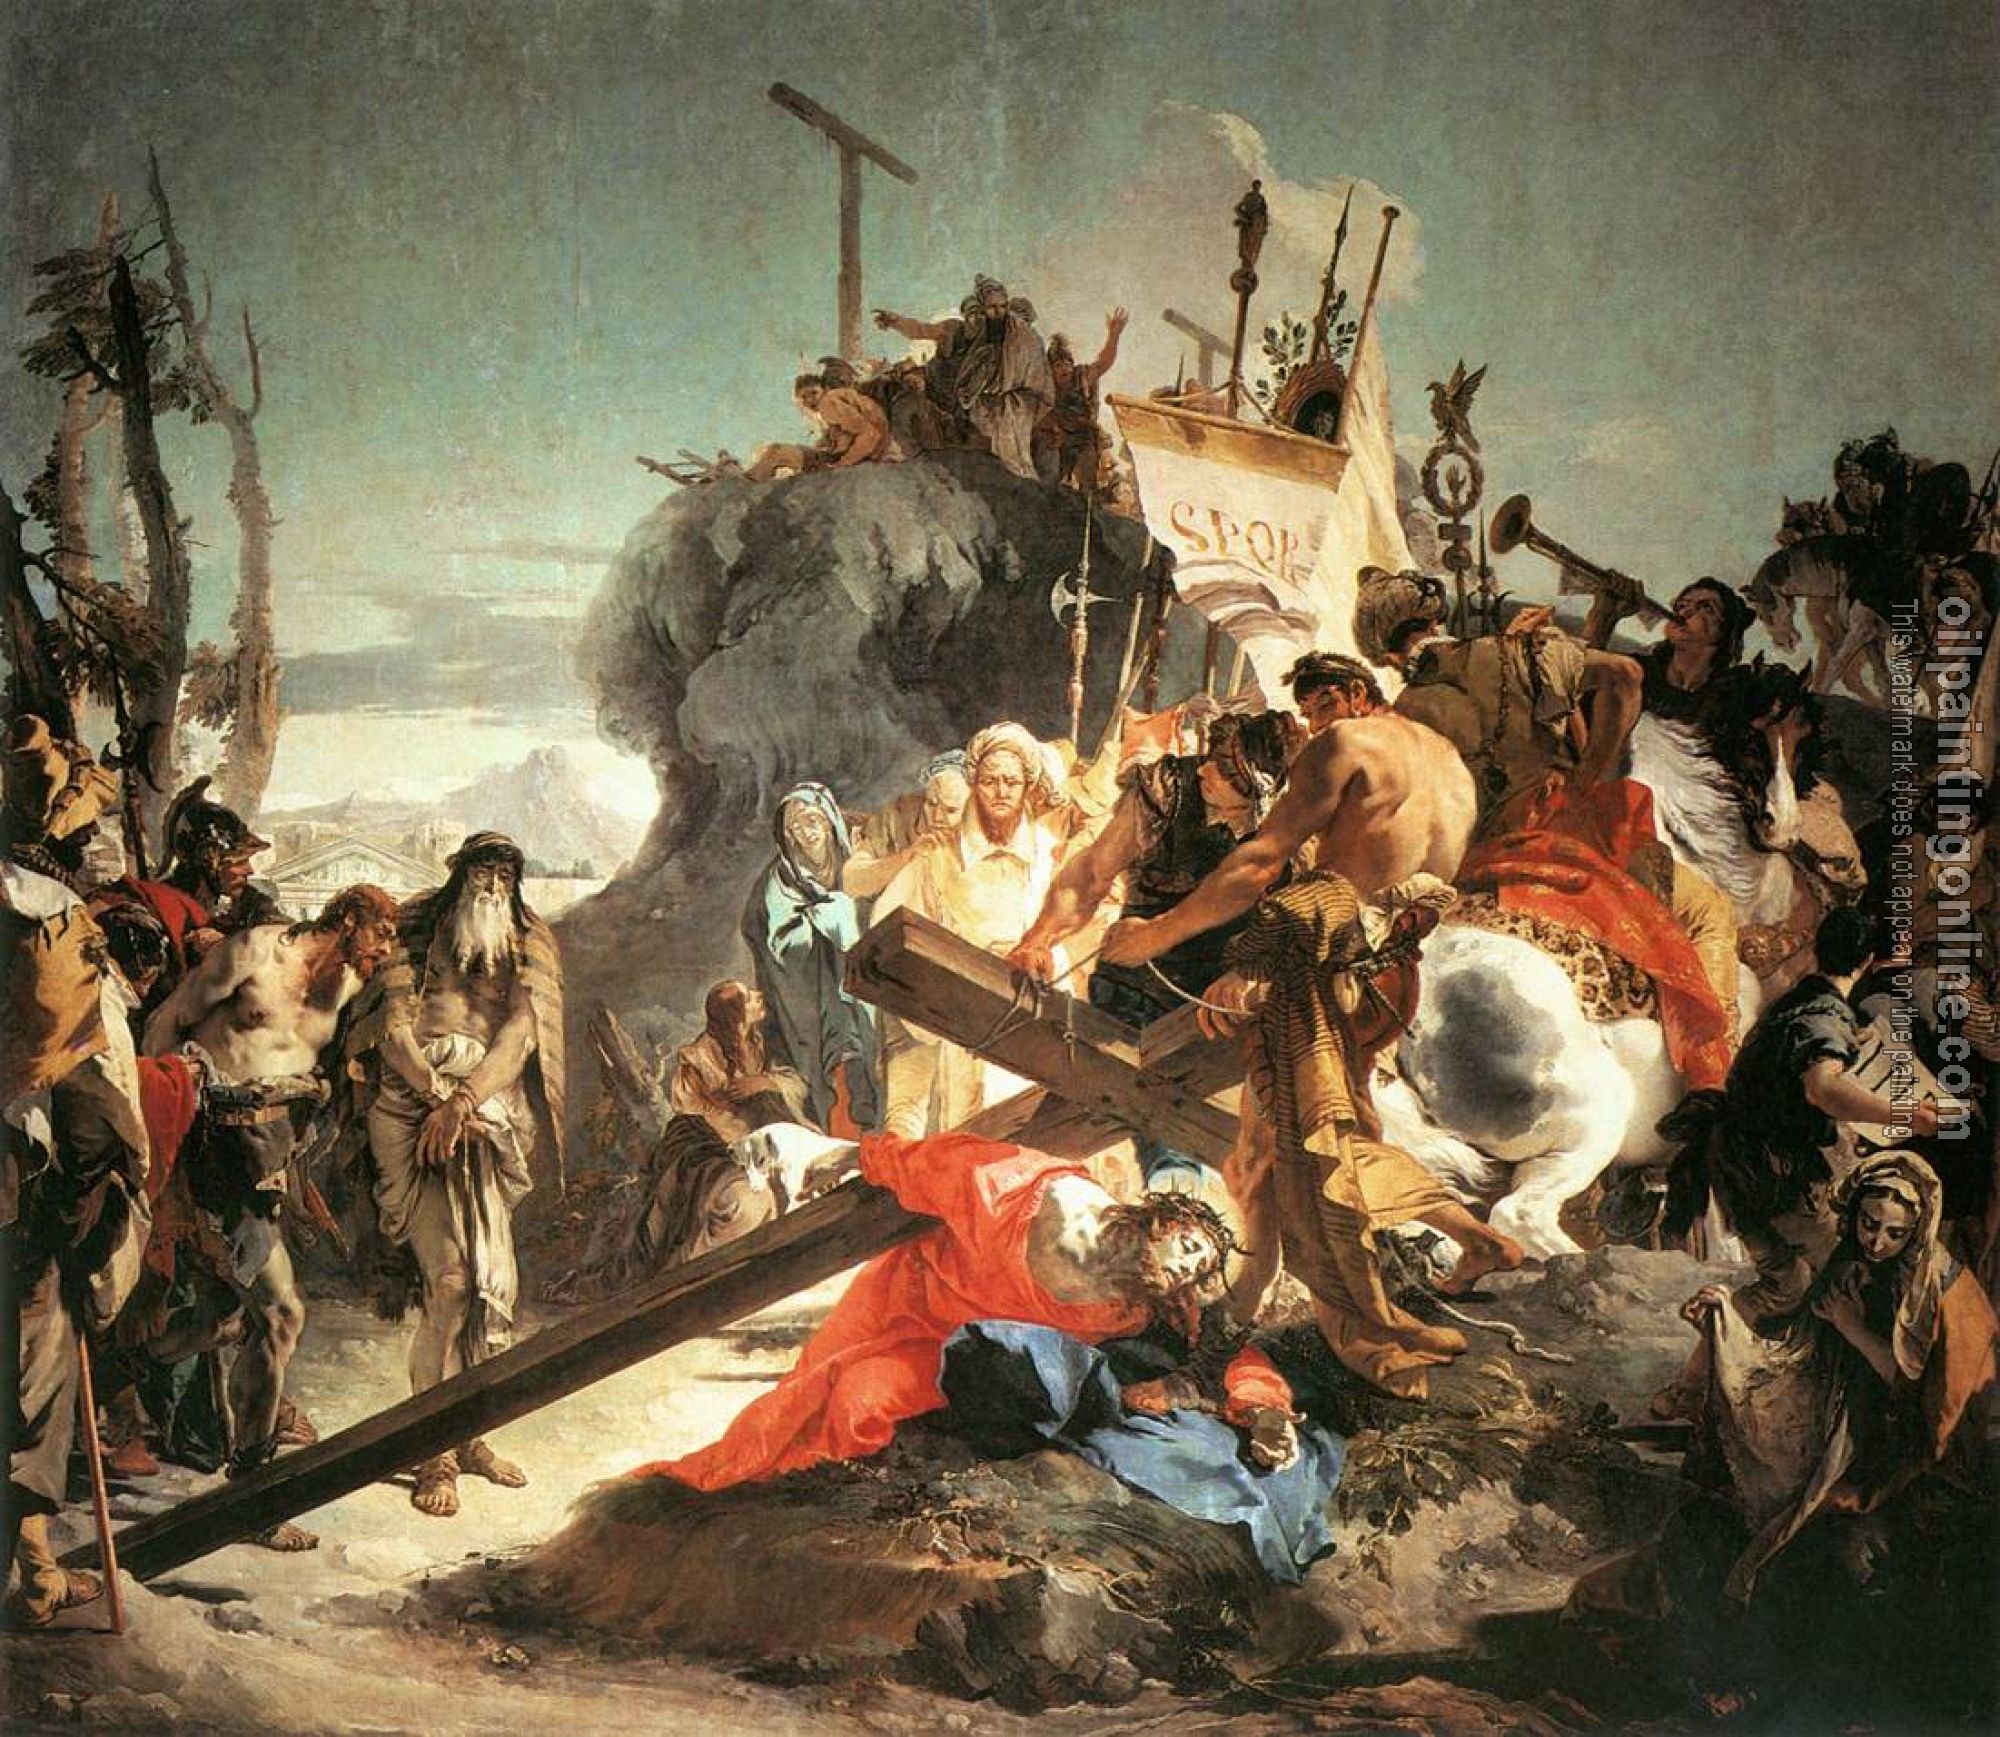 Tiepolo, Giovanni Battista - Christ Carrying the Cross